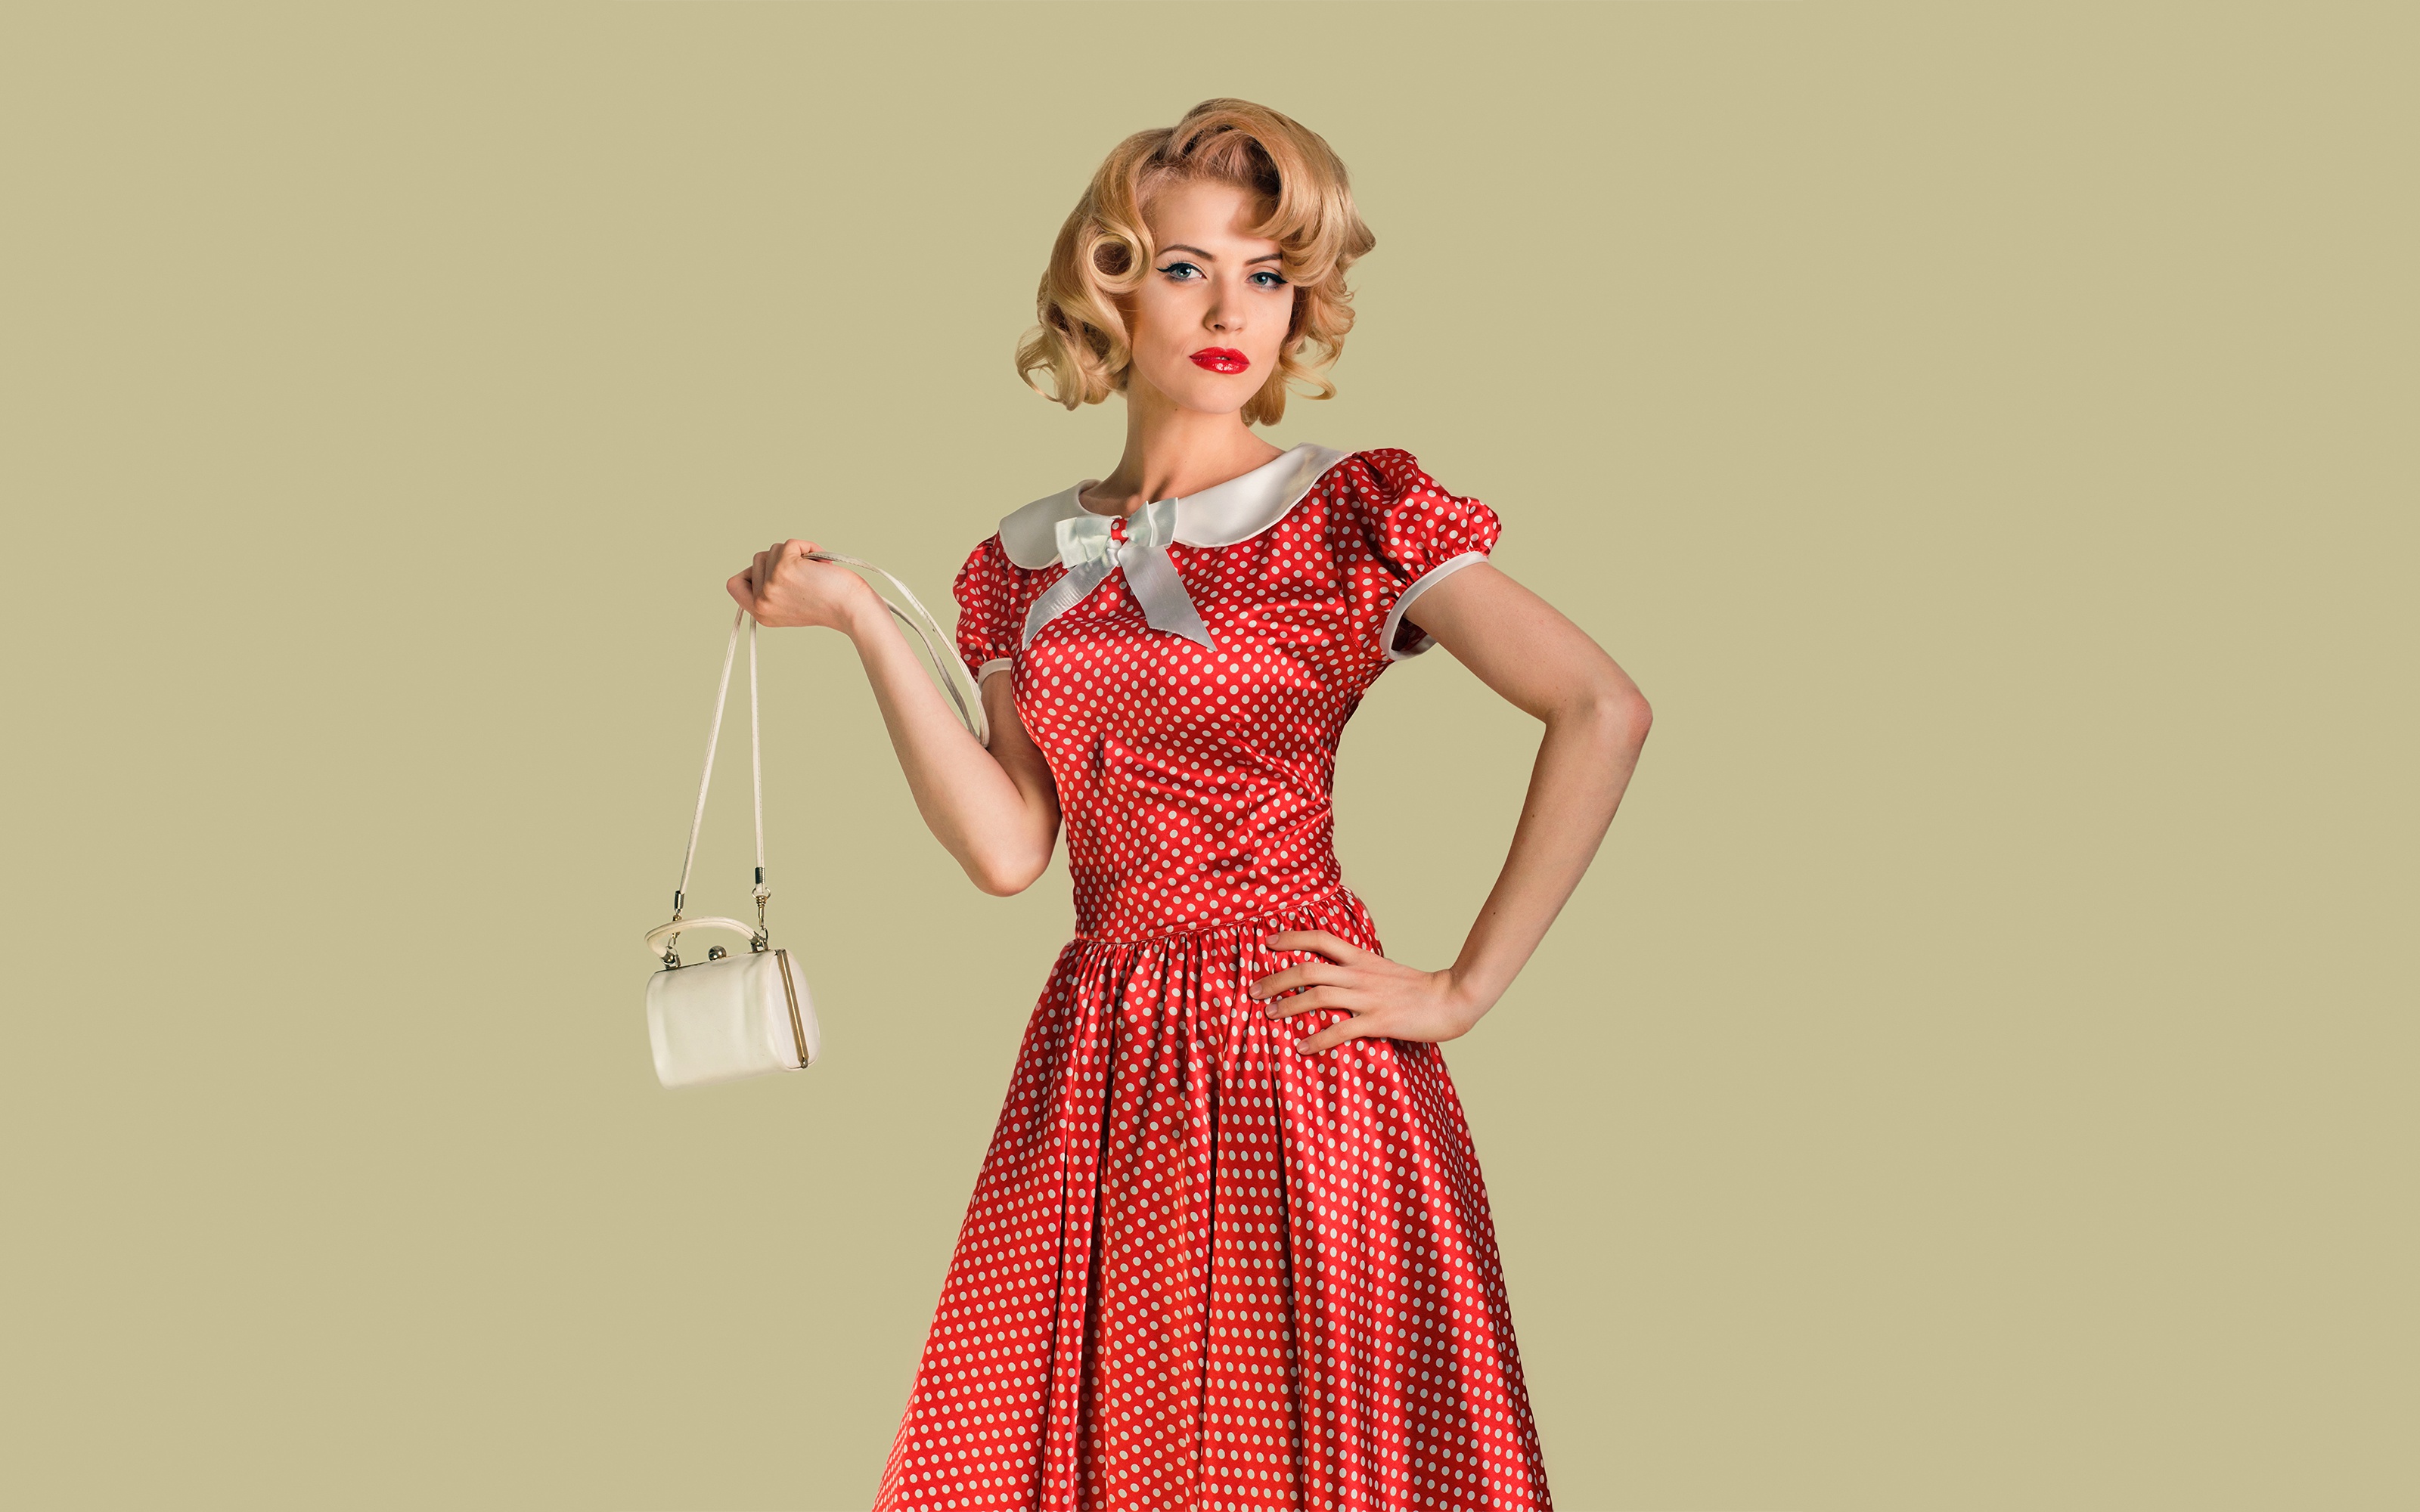 Девушка ретро стиль. Платье в стиле ретро. Ретро стиль в одежде. Платье в стиле 50-х годов. Ретро стиль в одежде для девушек.